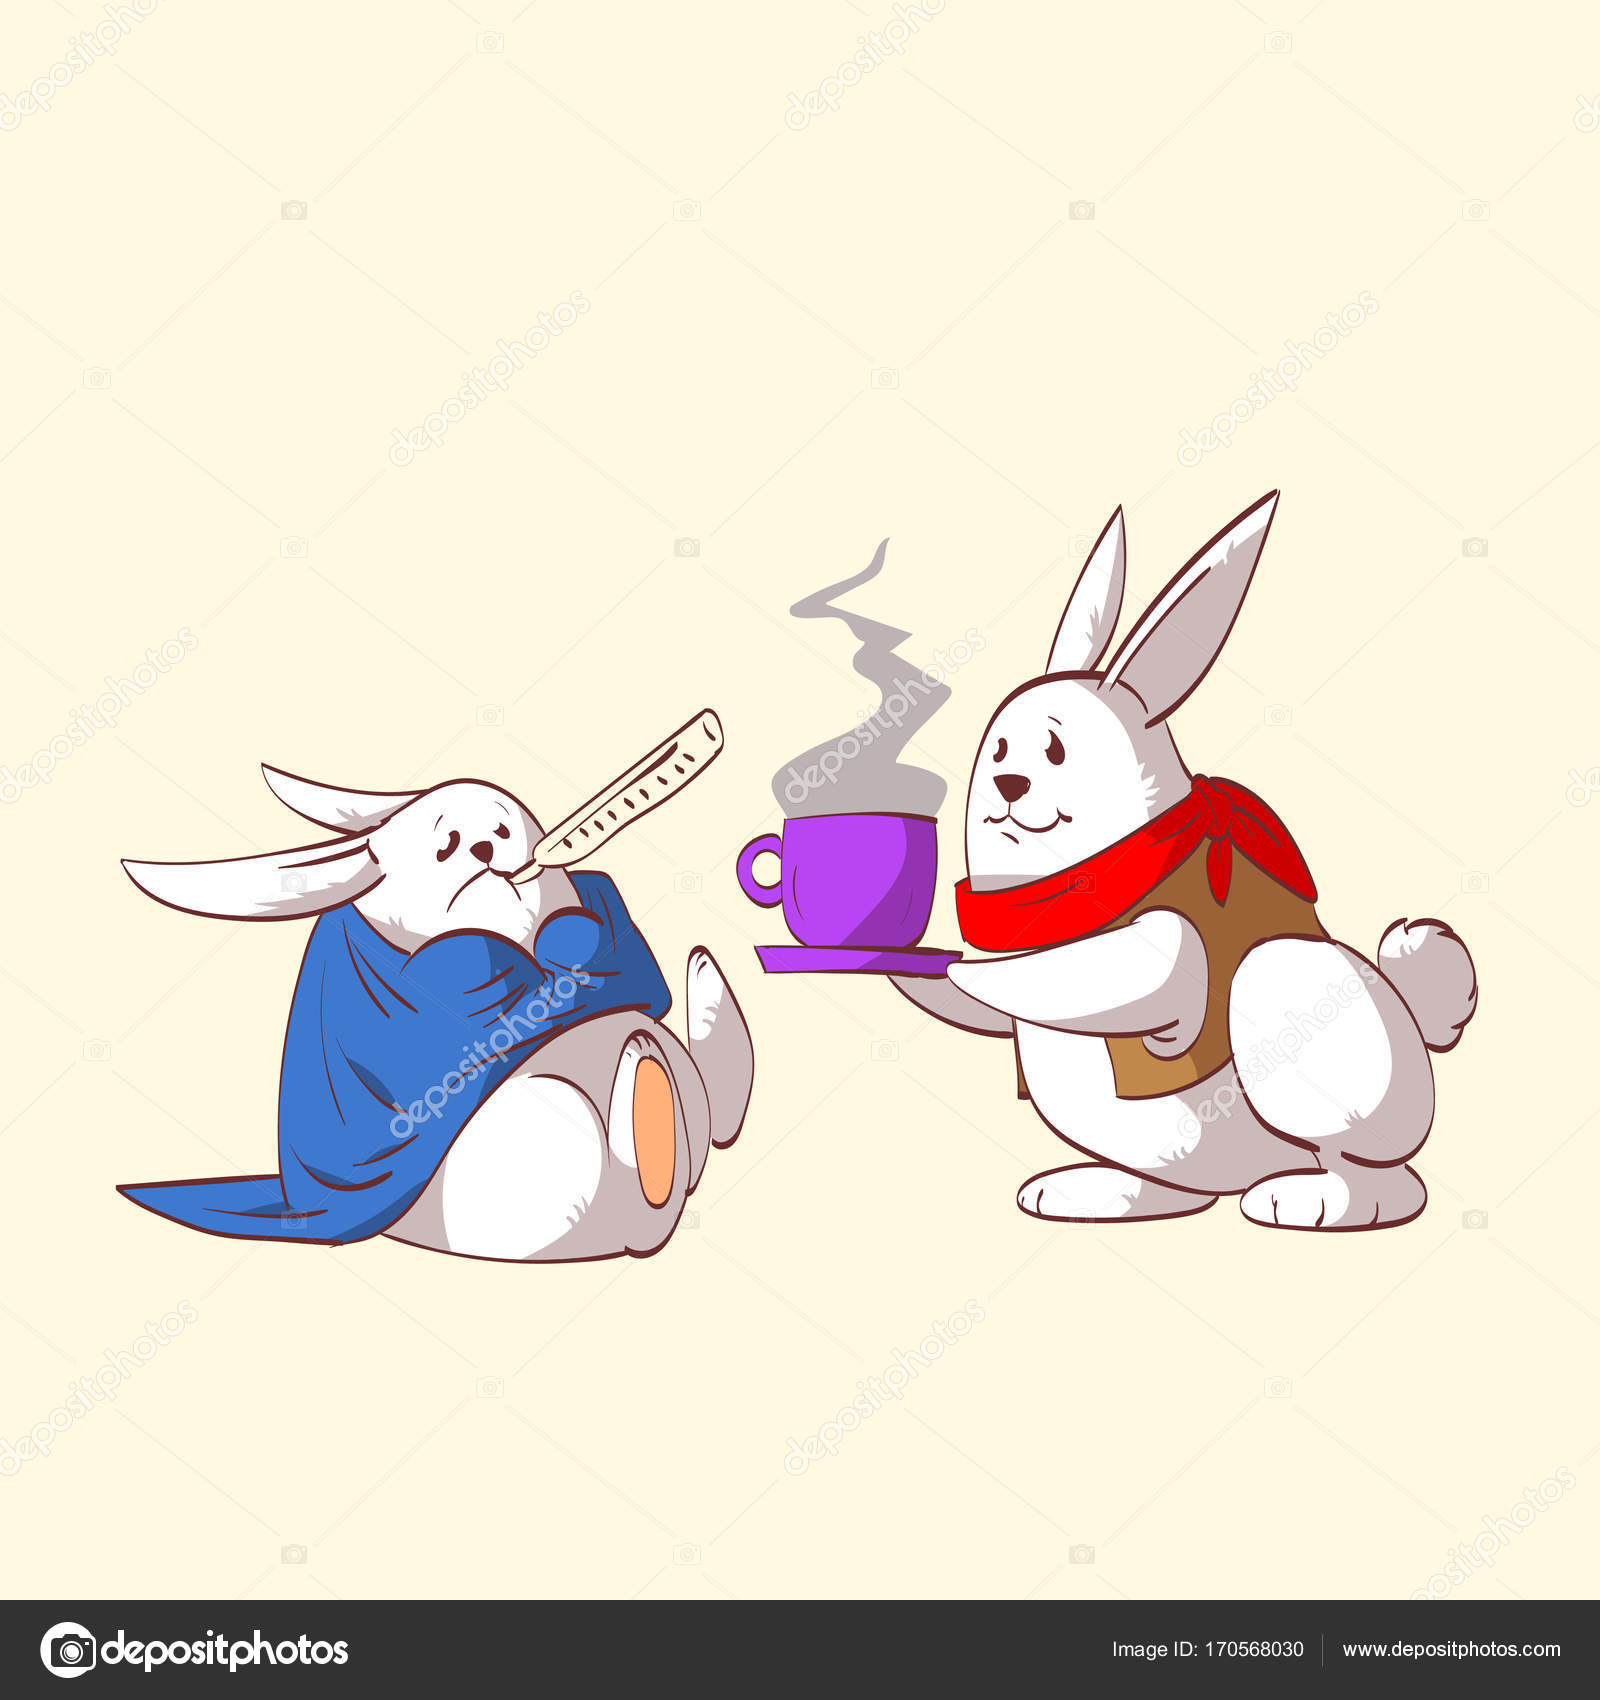 Un smiley pour ton humeur ! - Page 2 Depositphotos_170568030-stock-illustration-cartoon-sick-rabbit